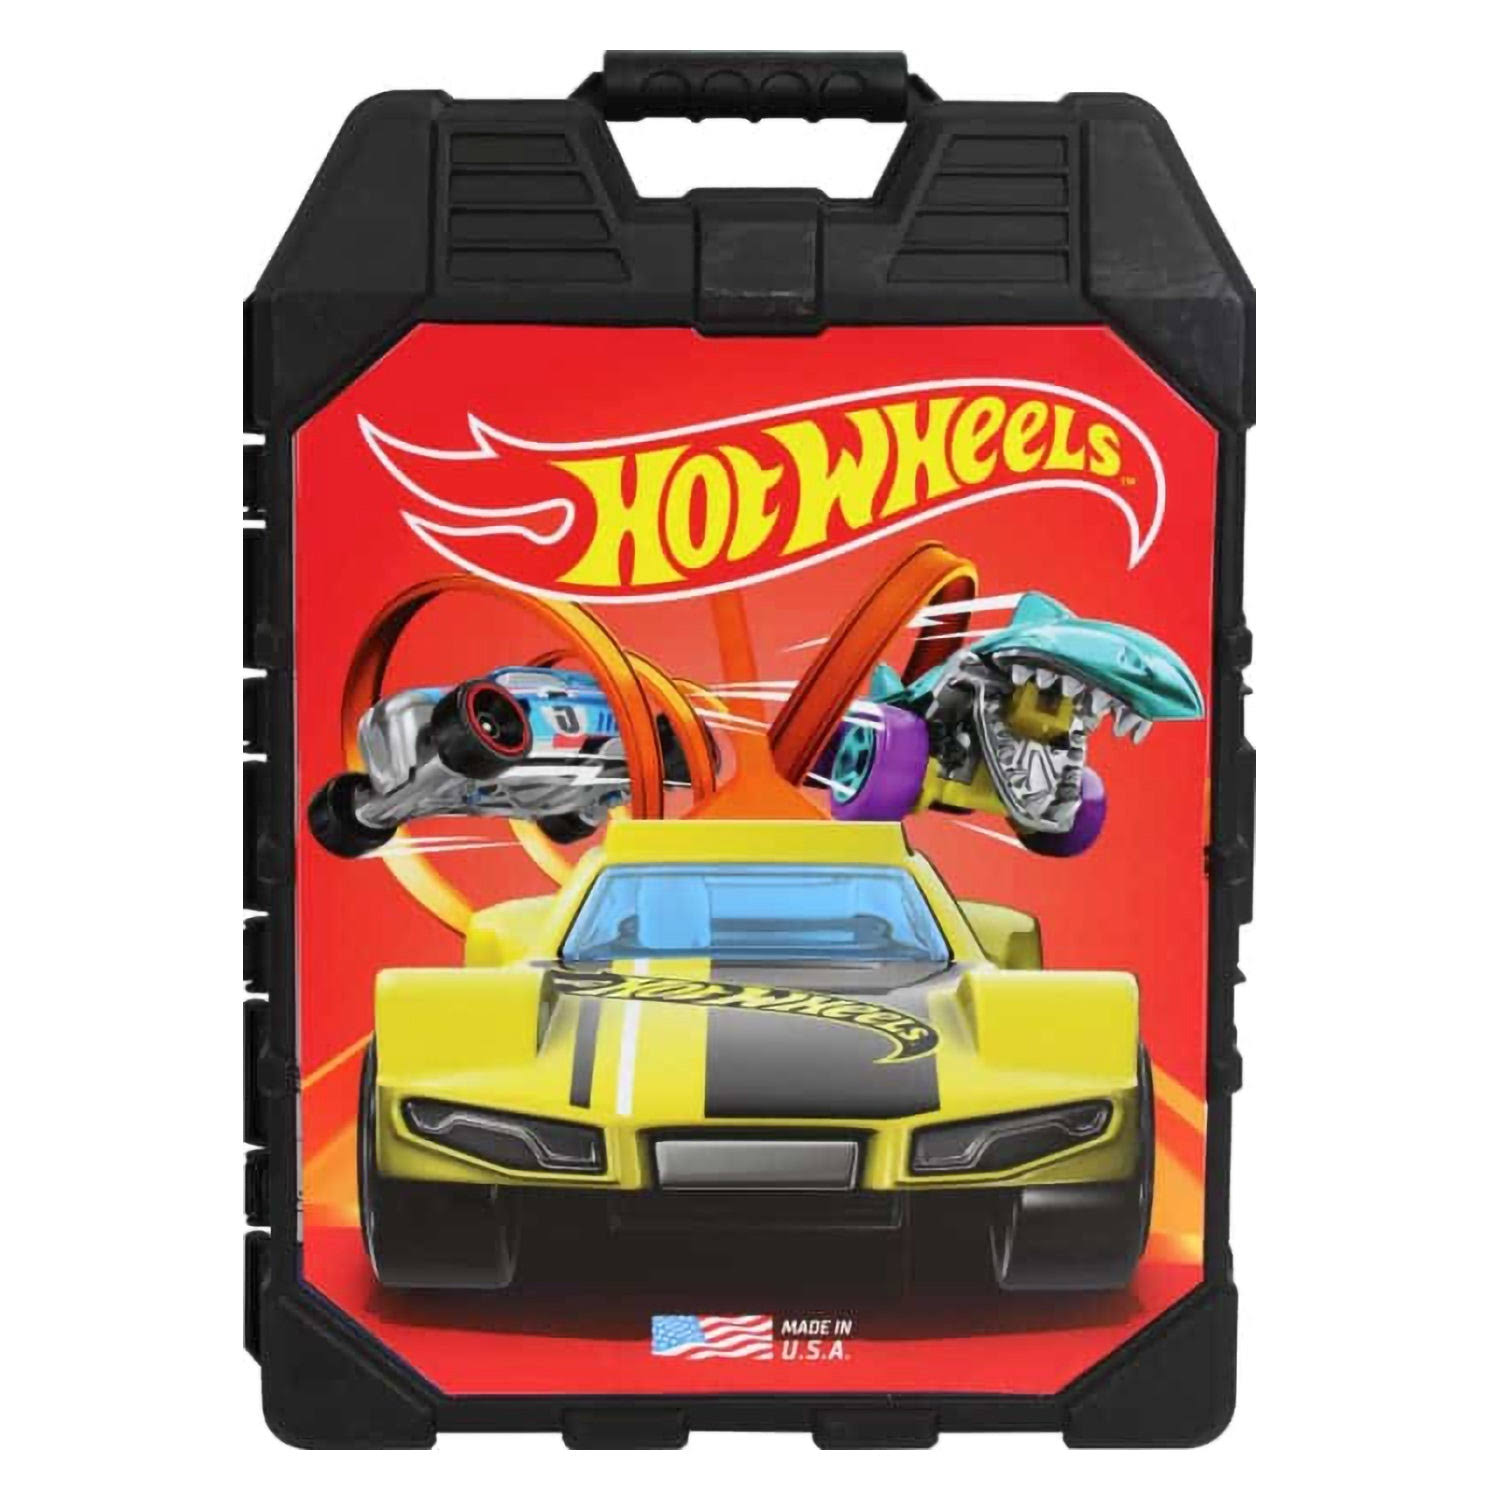 Tara Toys Hot Wheels Molded 48 Car Case - Colors and Styles May Vary